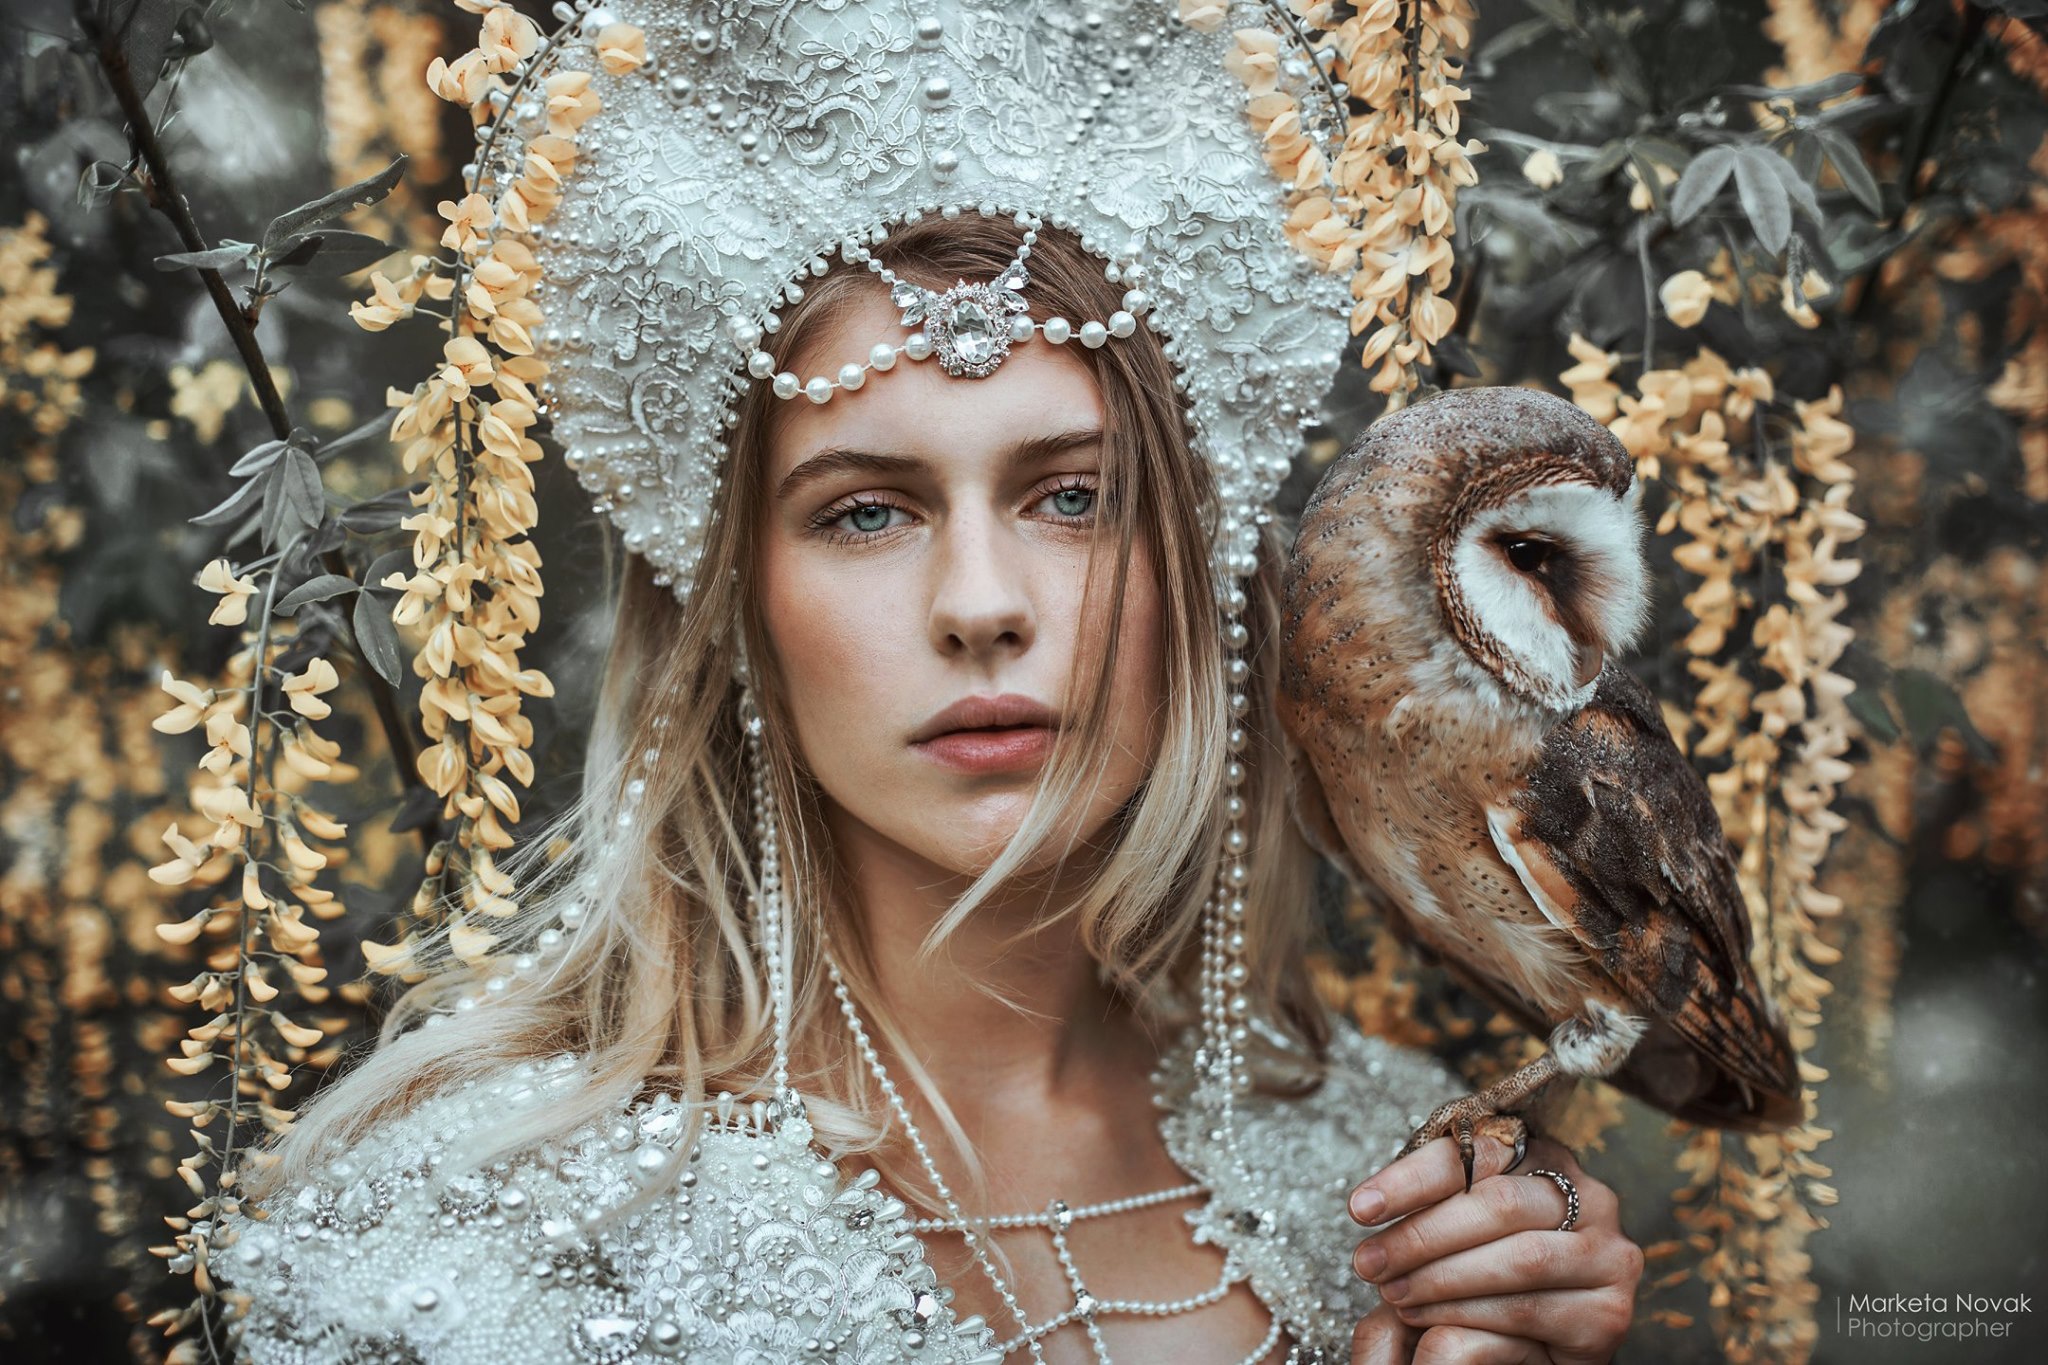 Marketa Novak Women Model Fantasy Girl Animals Birds Owl 2048x1365